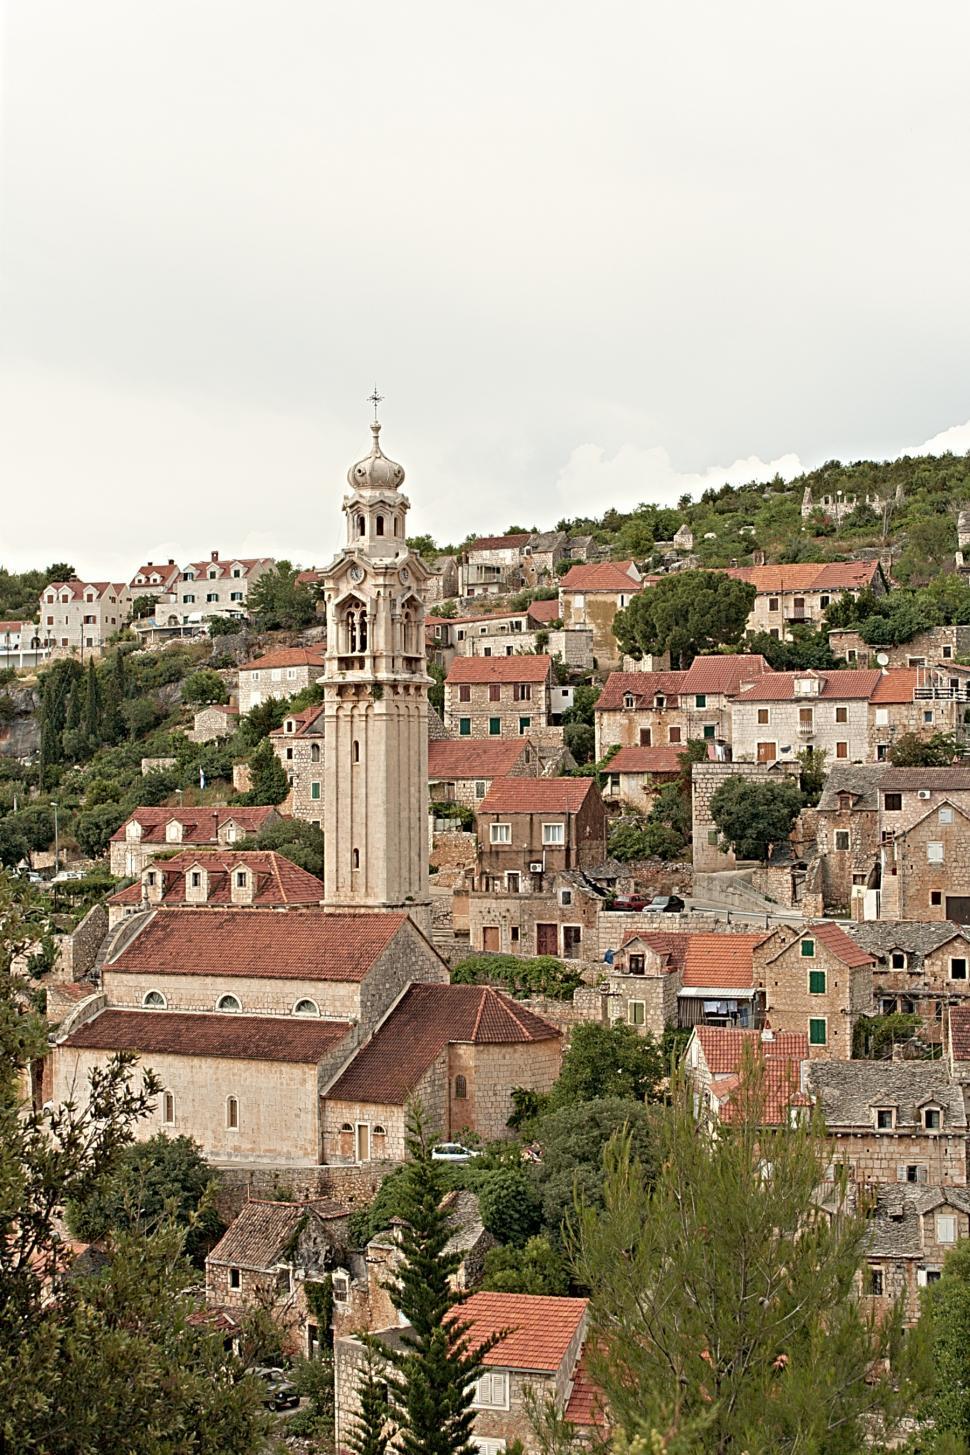 Free Image of Dalmatian town 